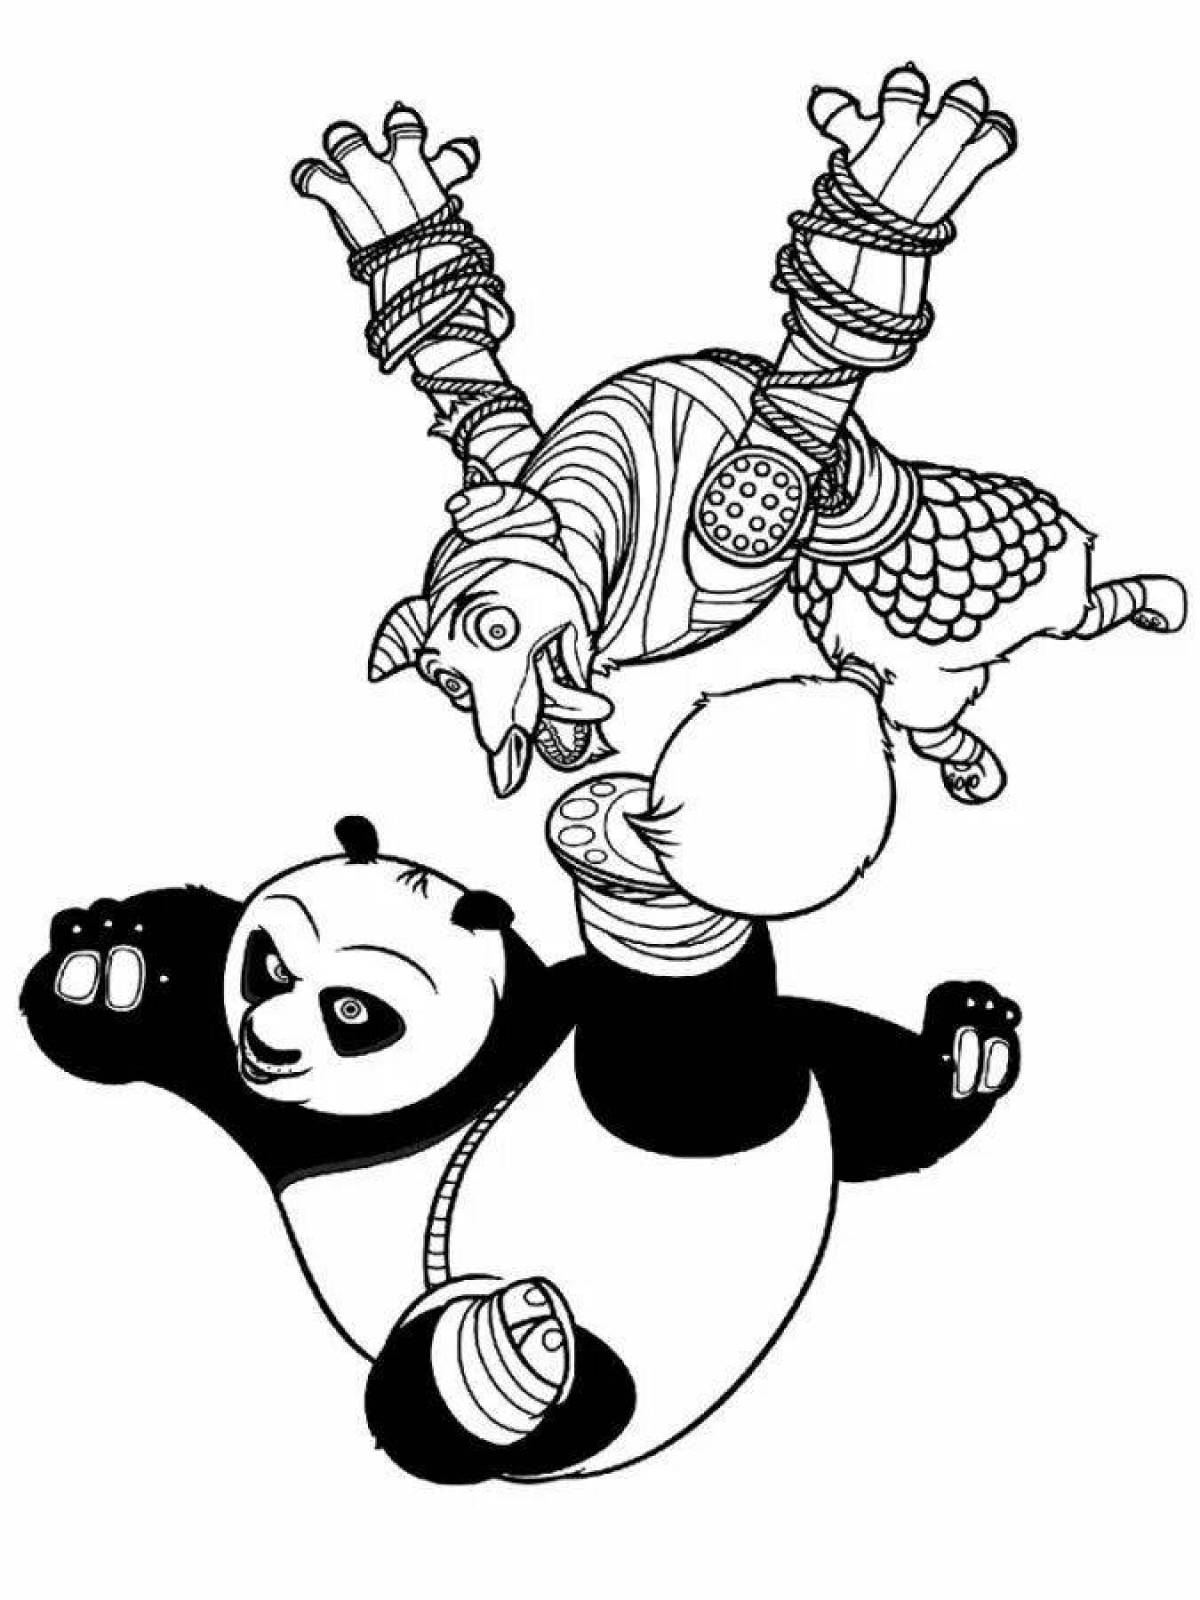 Color-explosive kung fu panda coloring page